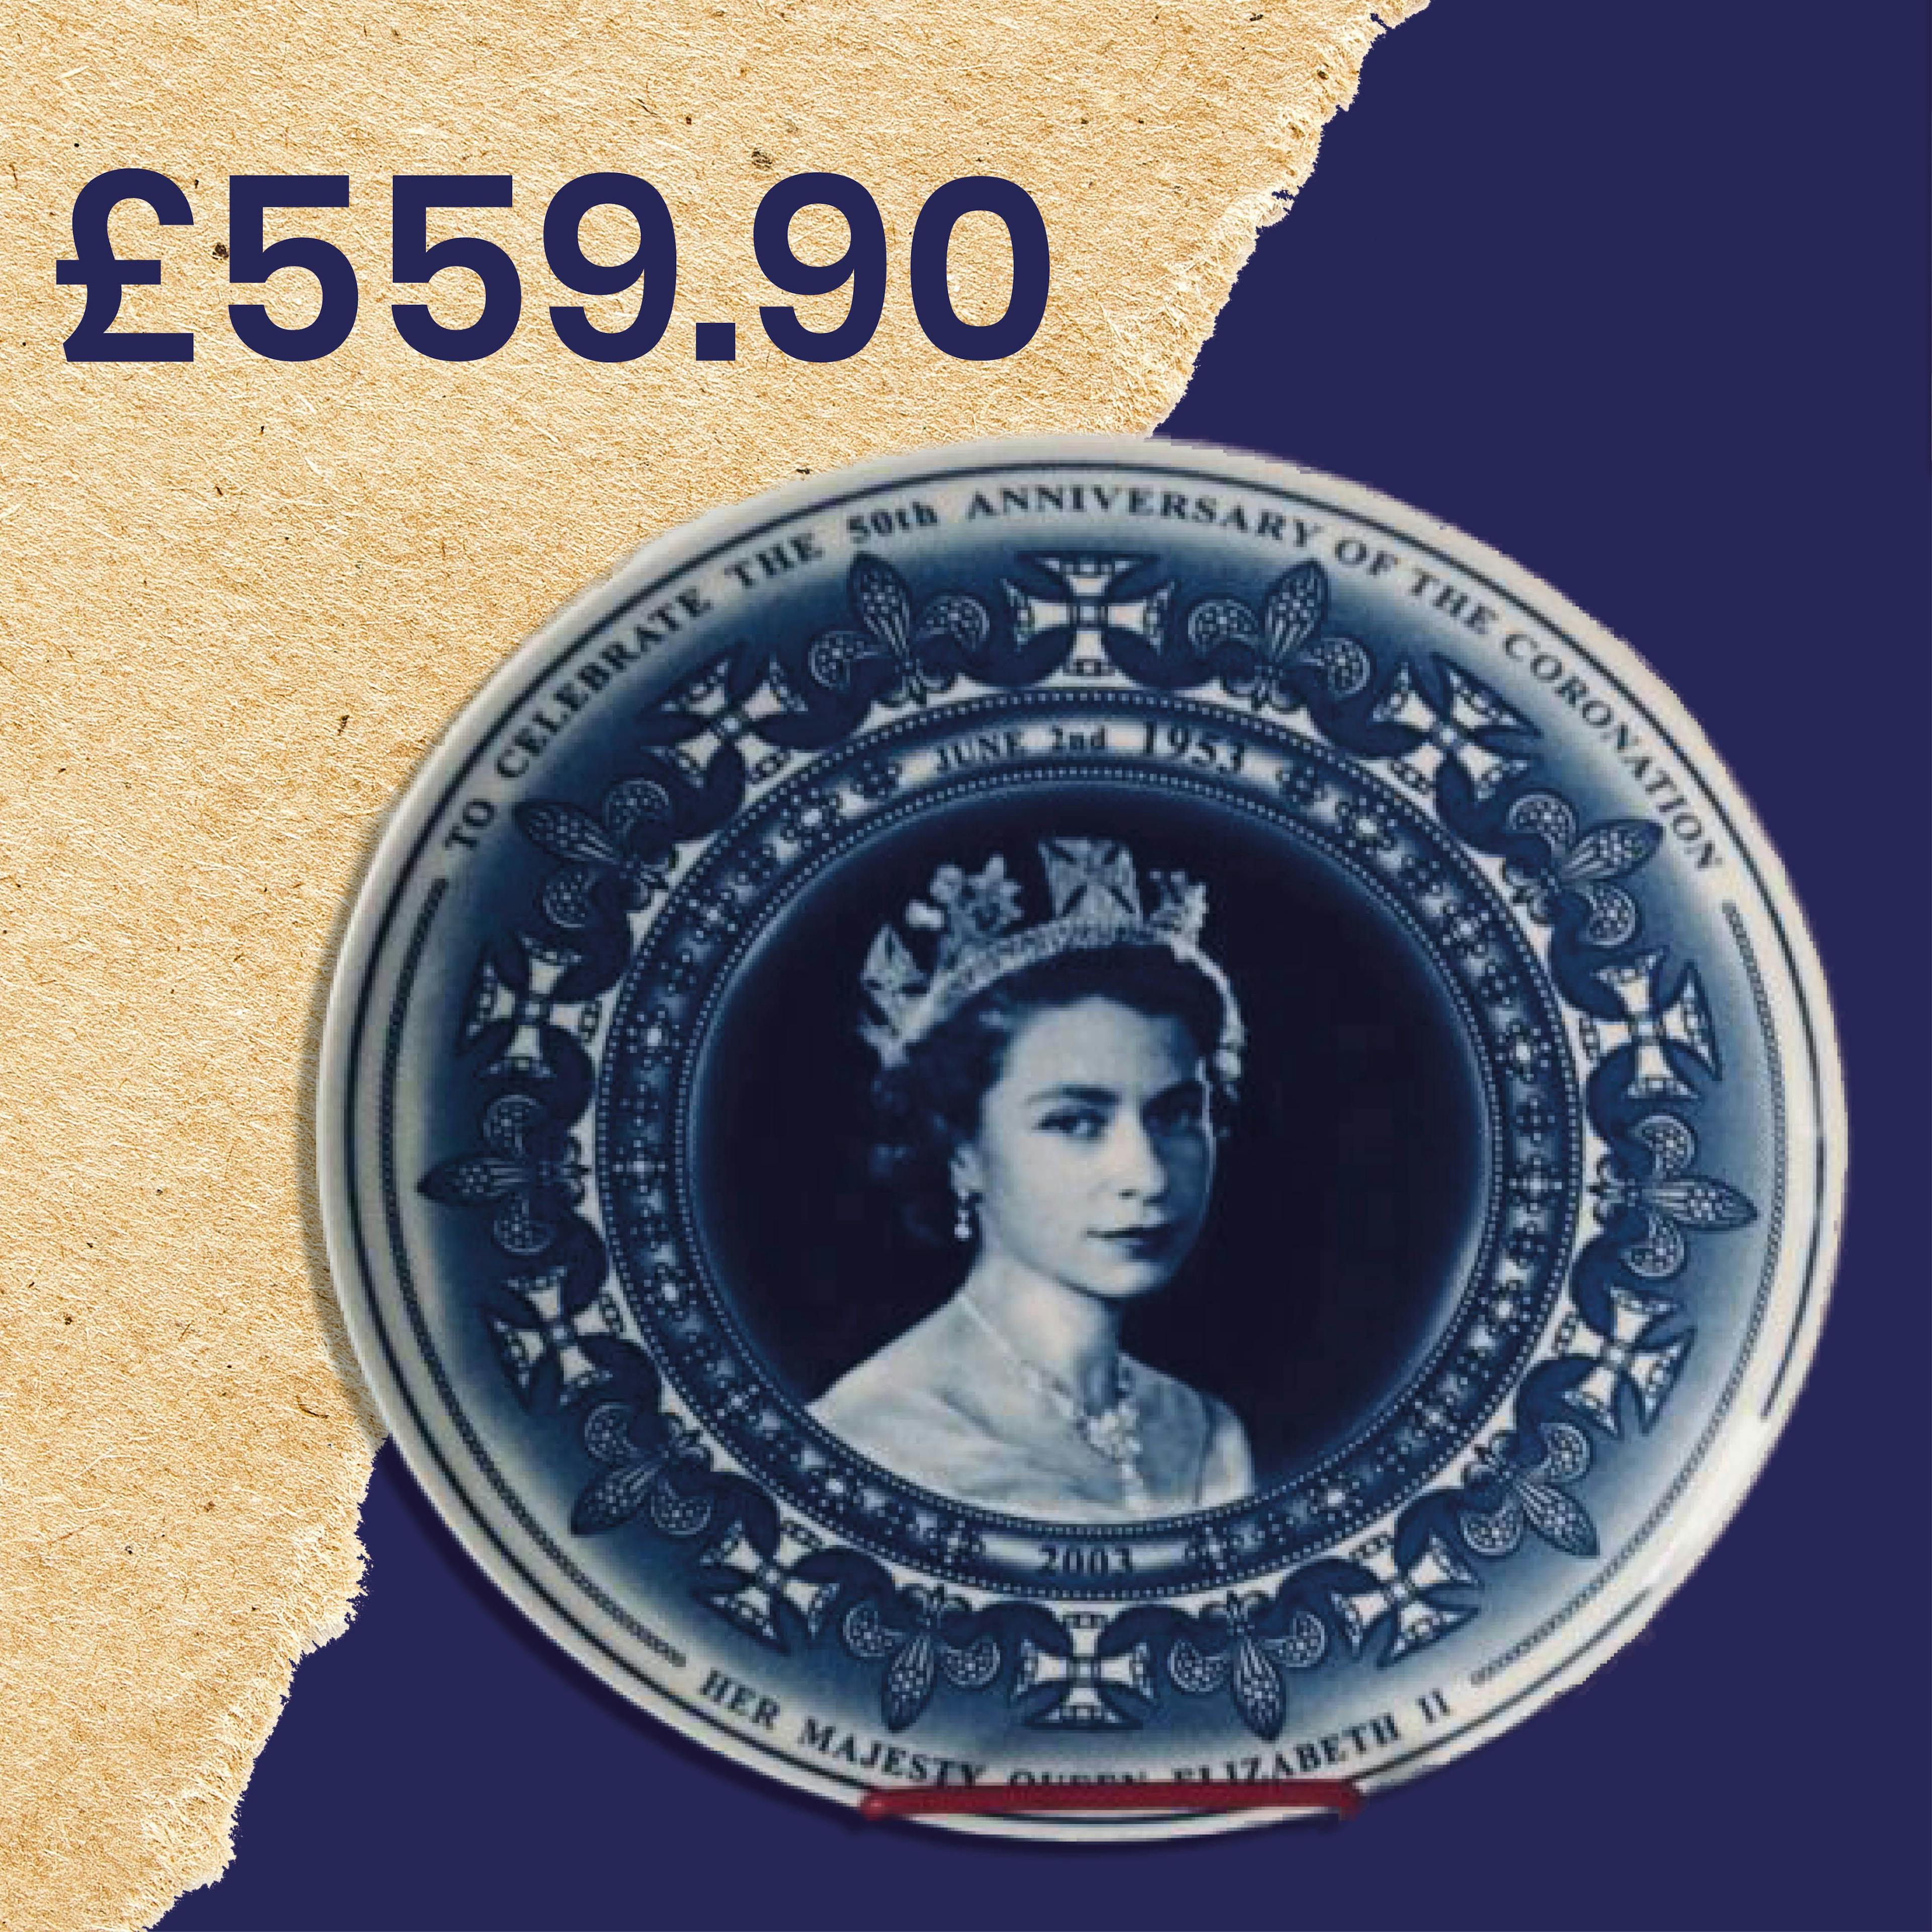 Queen Elizabeth II Coronation worth £559.90